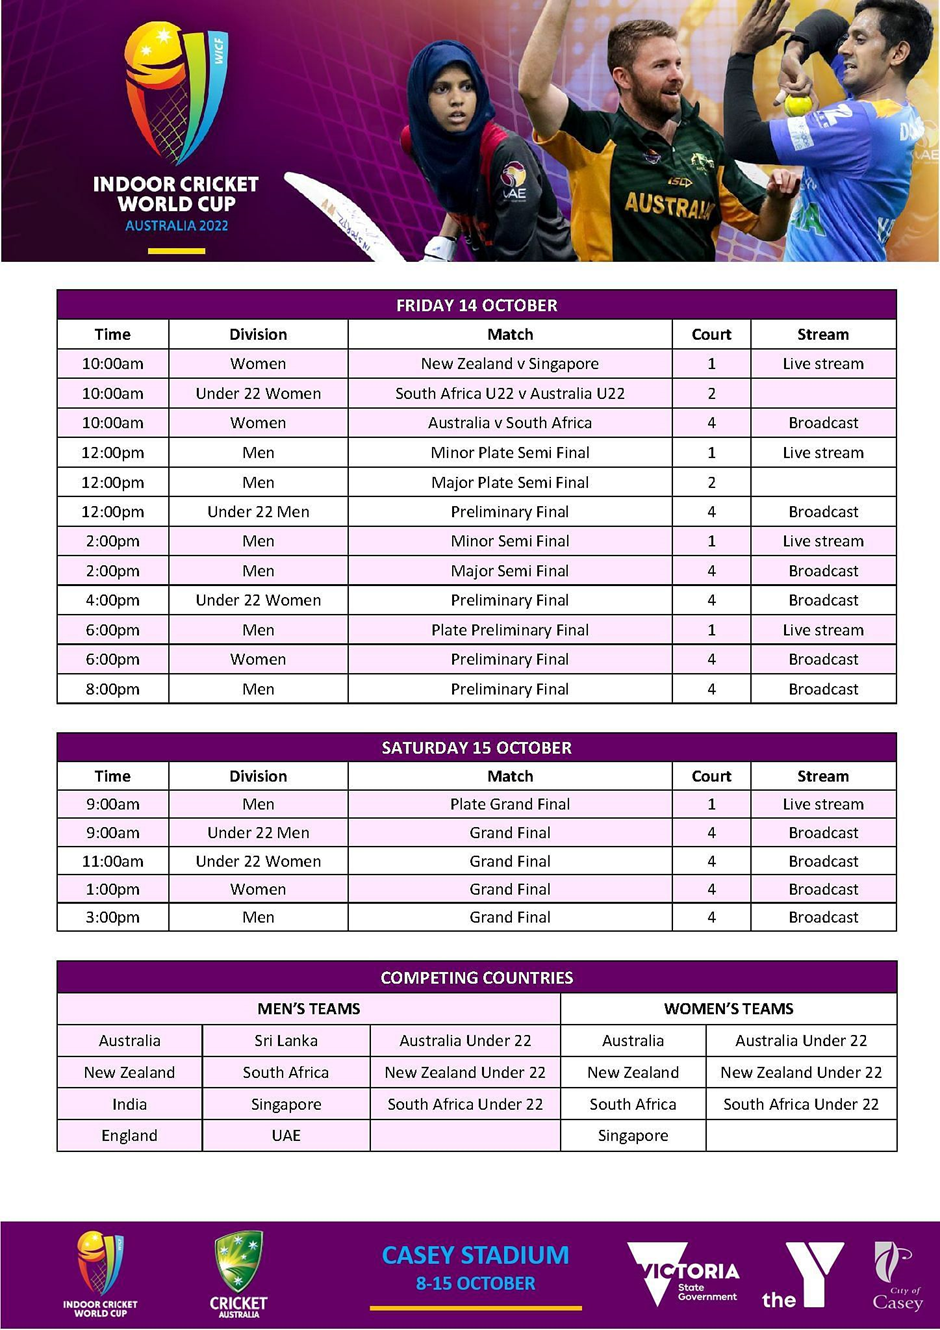 Indoor Cricket News 2022 World Cup Fixtures Released, Teams and Format